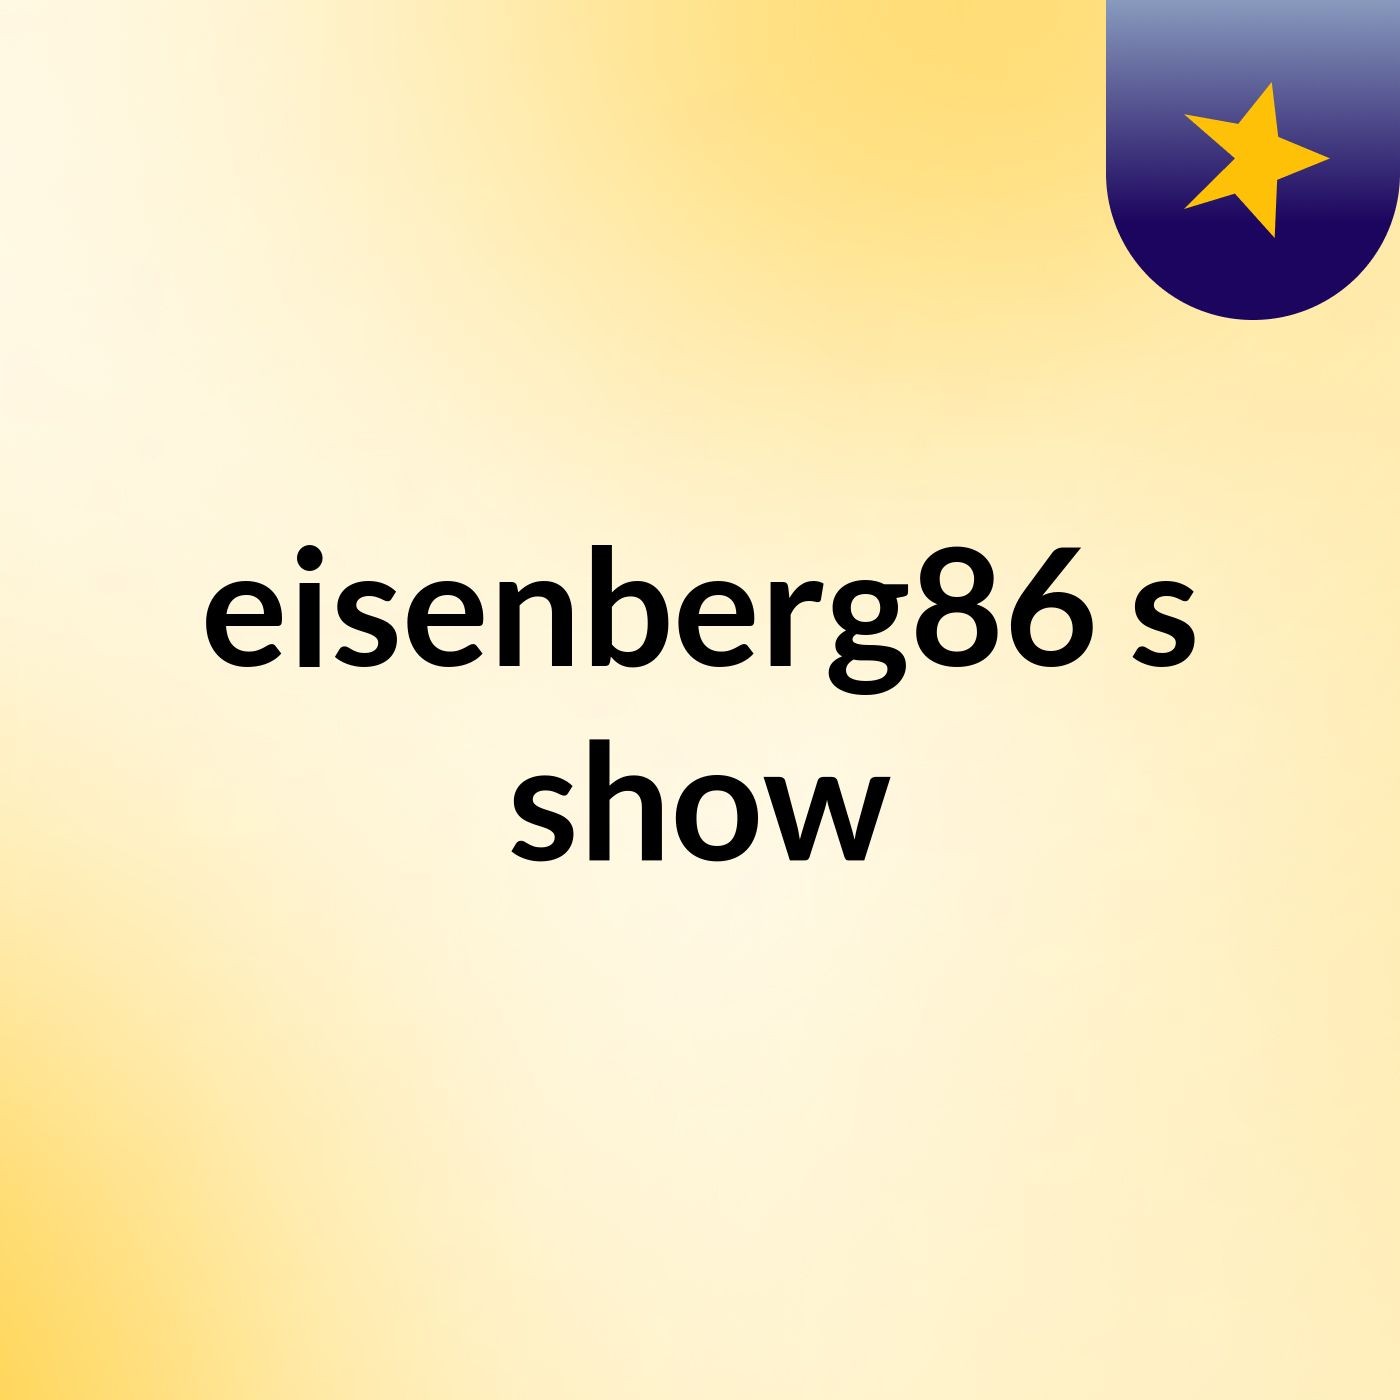 eisenberg86's show